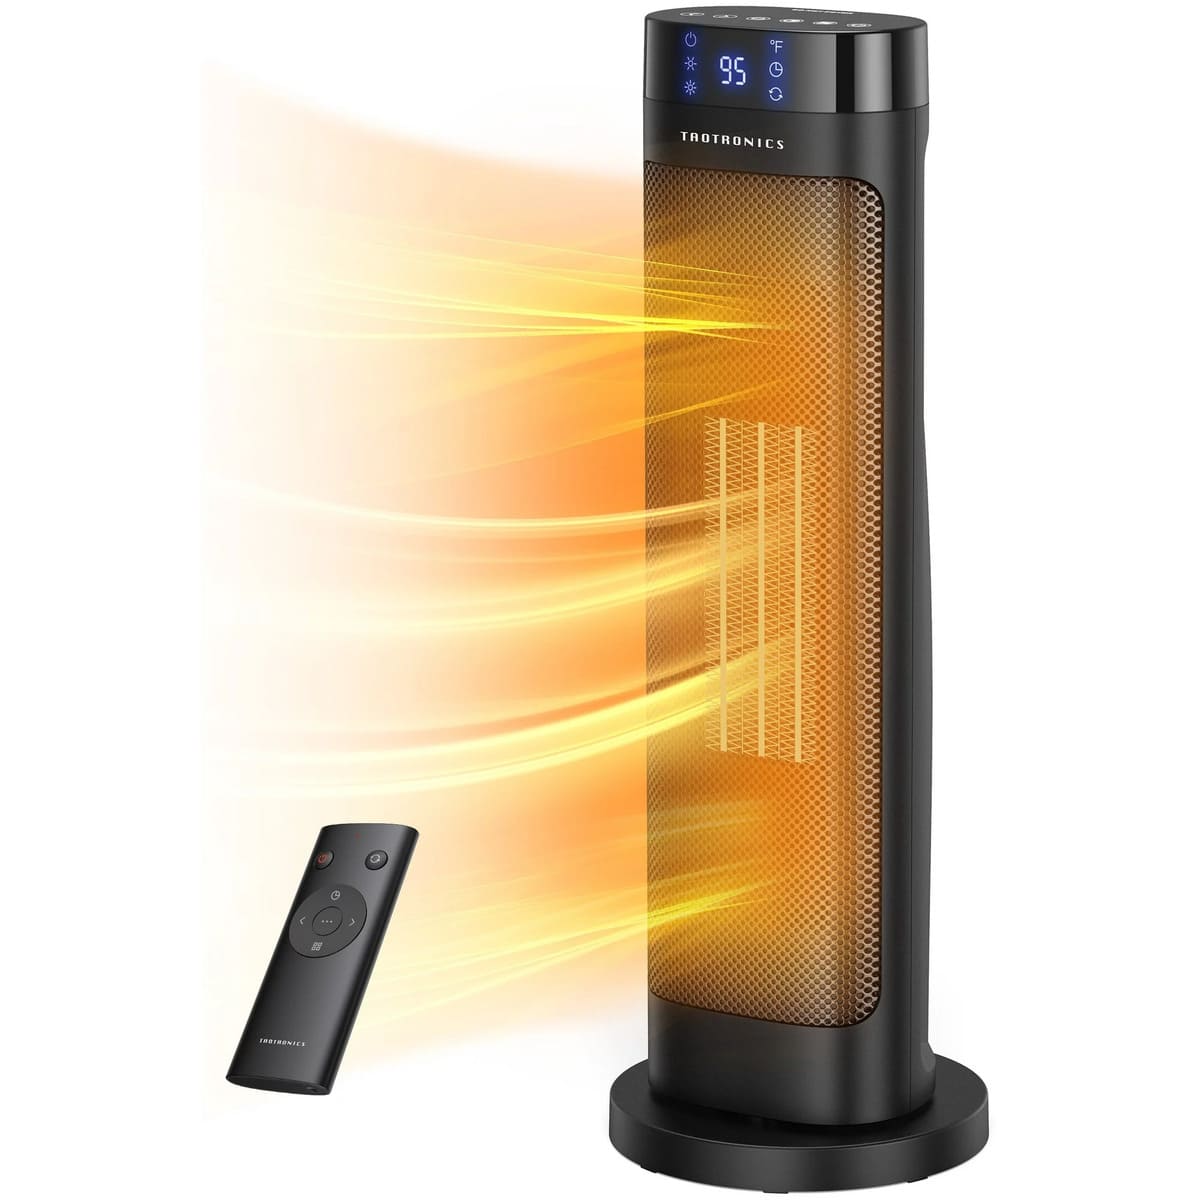 Walmart TaoTronics Space Heater, 1500W Portable Electric Heater